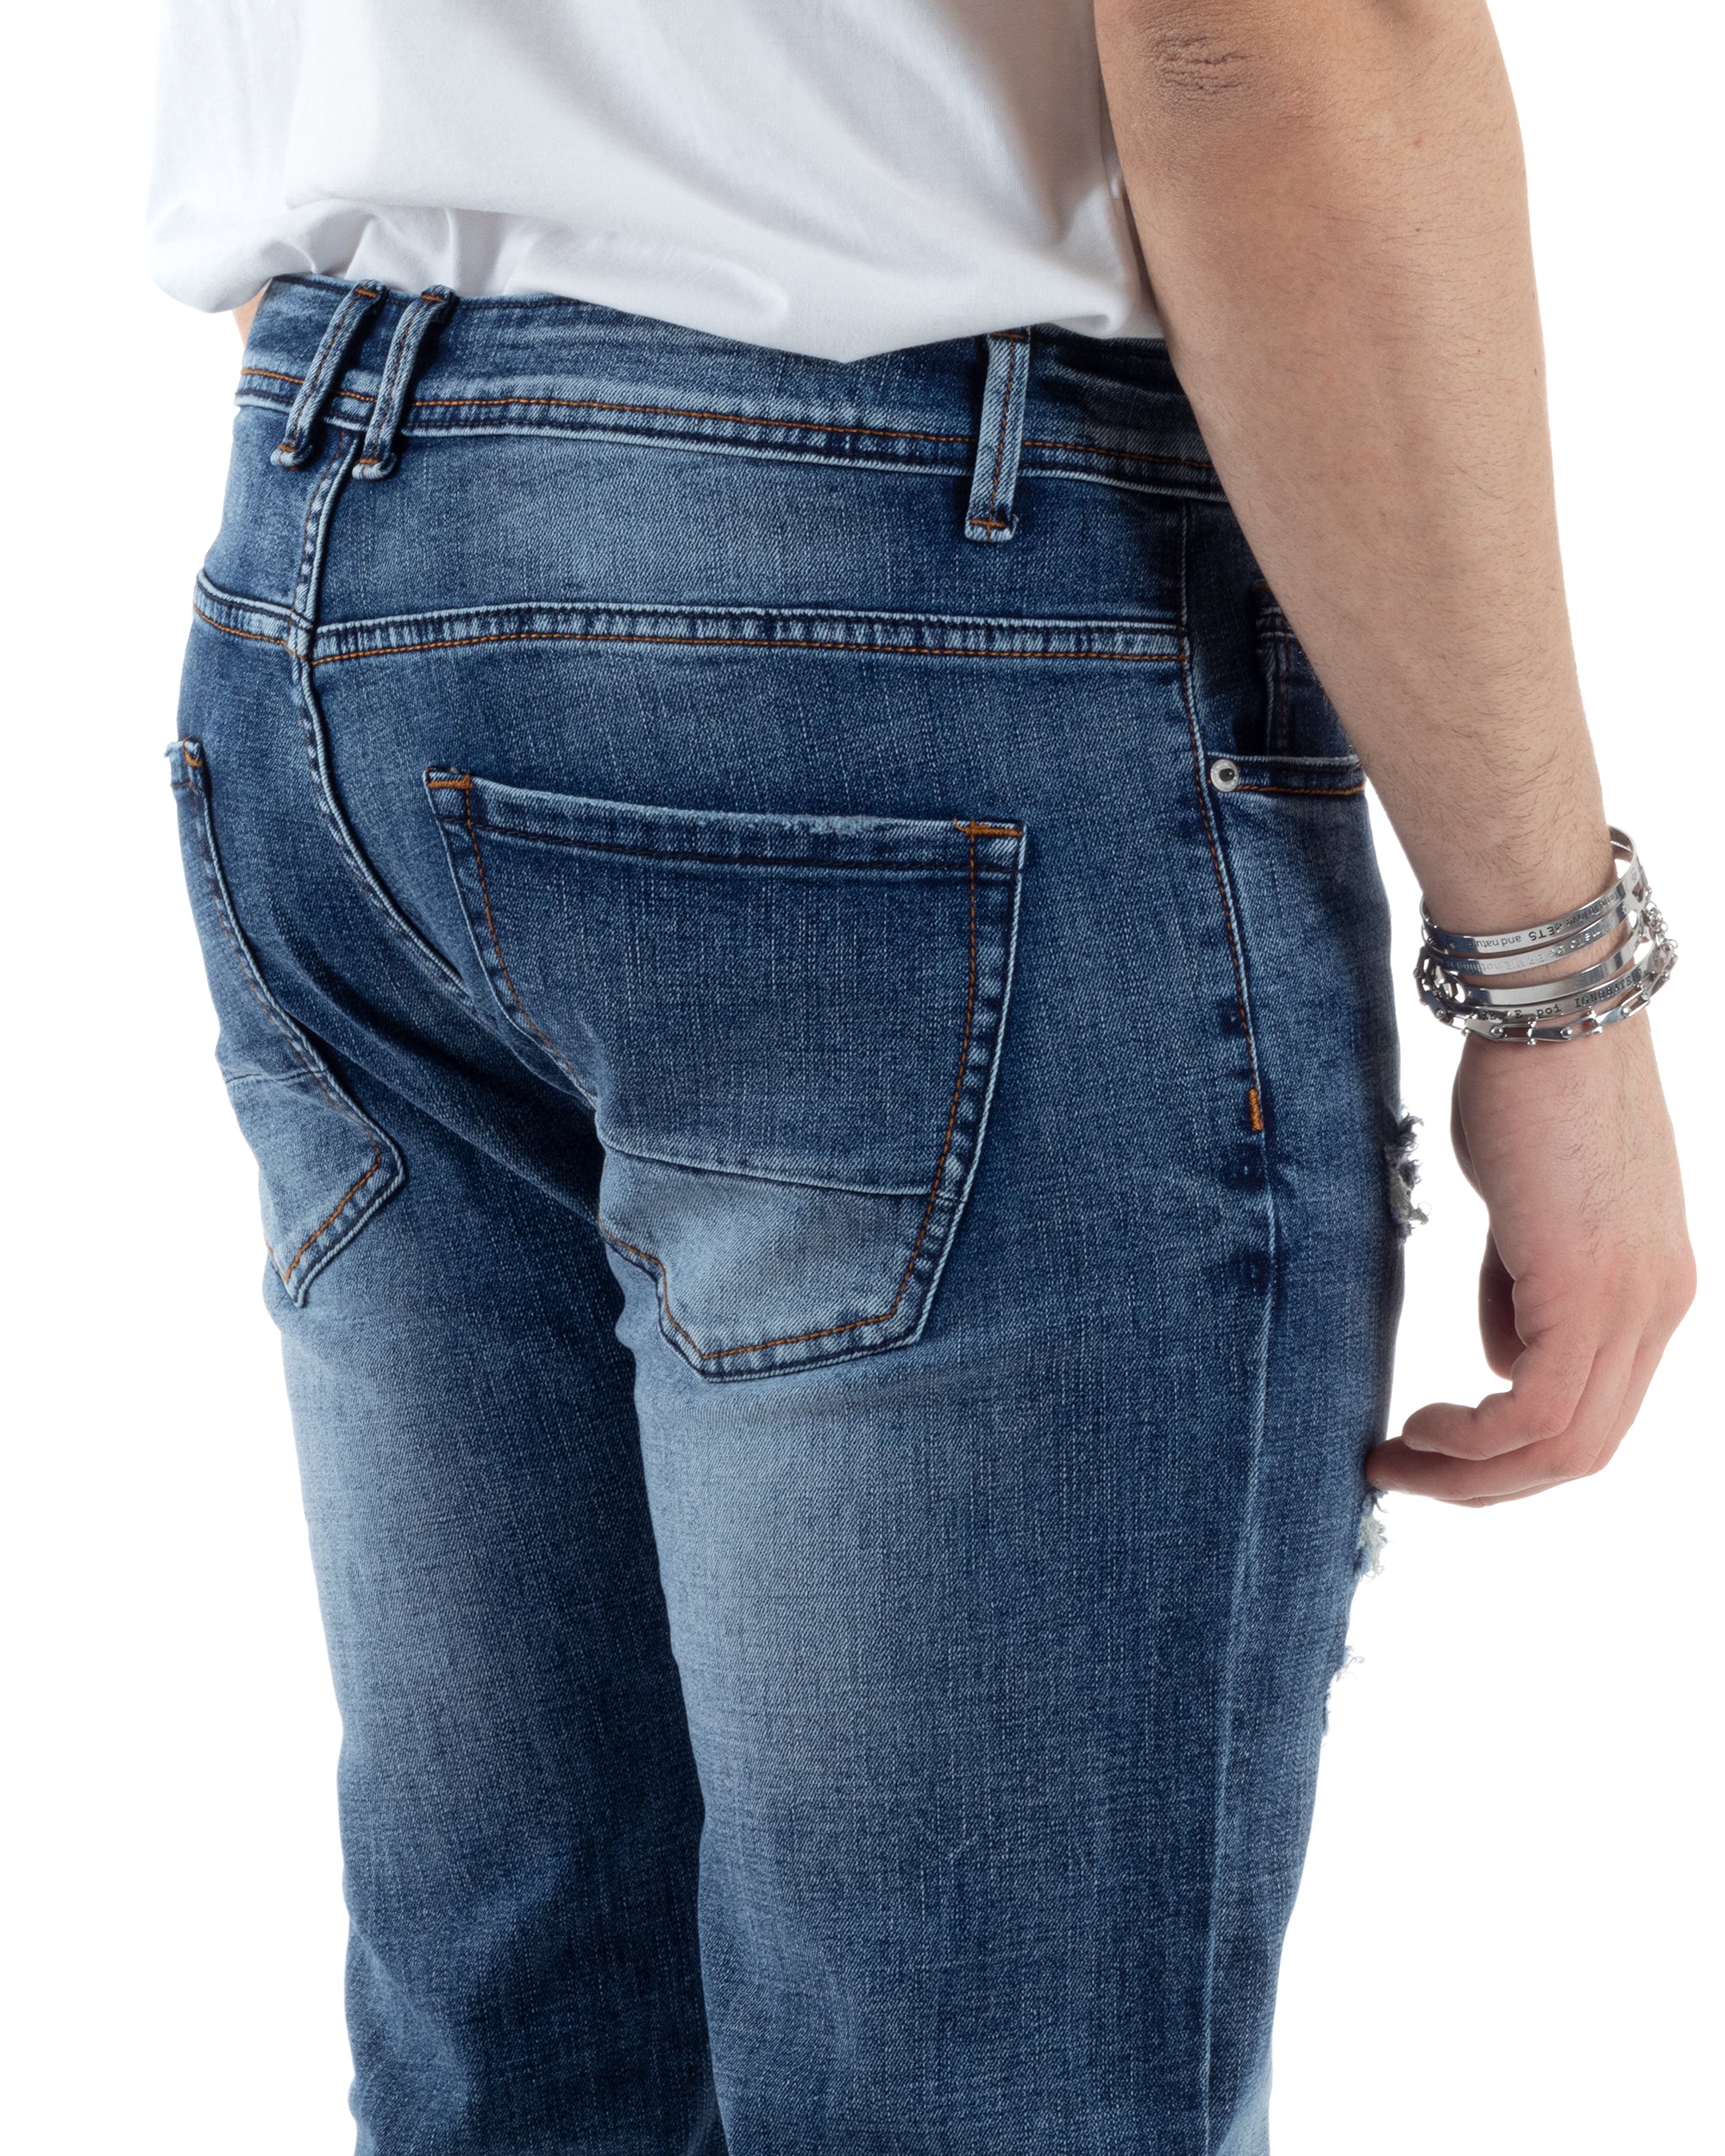 Pantaloni Uomo Jeans Con Rotture Cinque Tasche Slim Fit Blu Denim Stone Washed GIOSAL-JS1011A